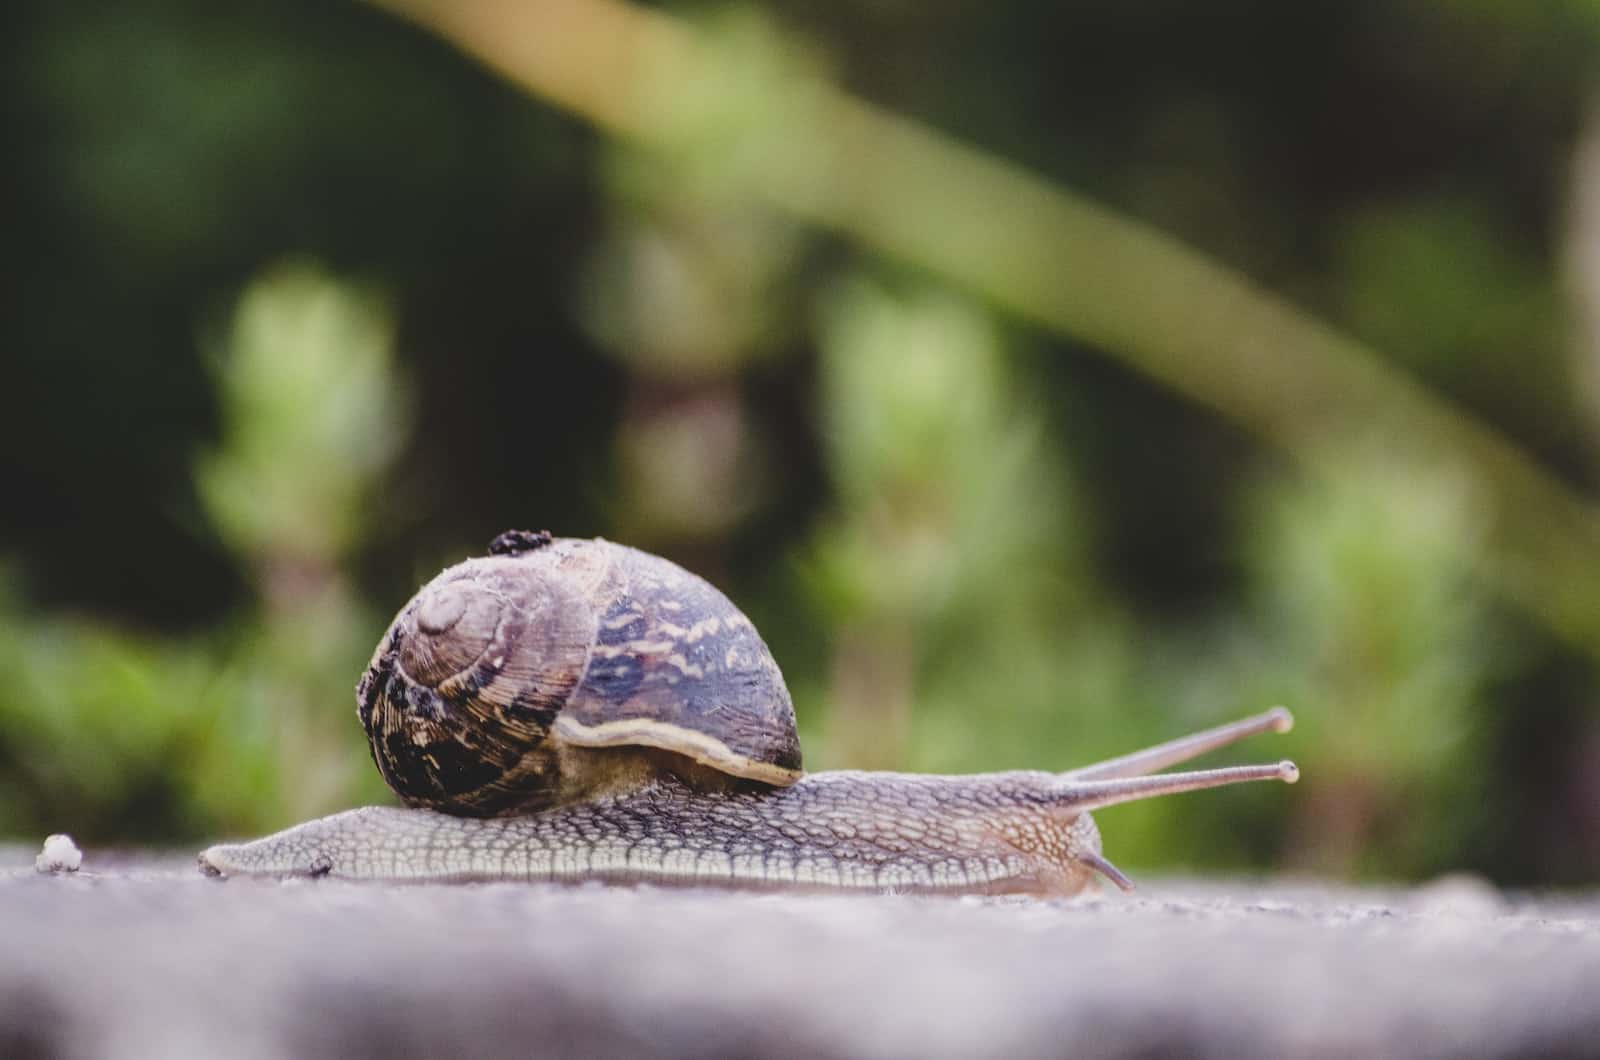 photo of a snail in garden